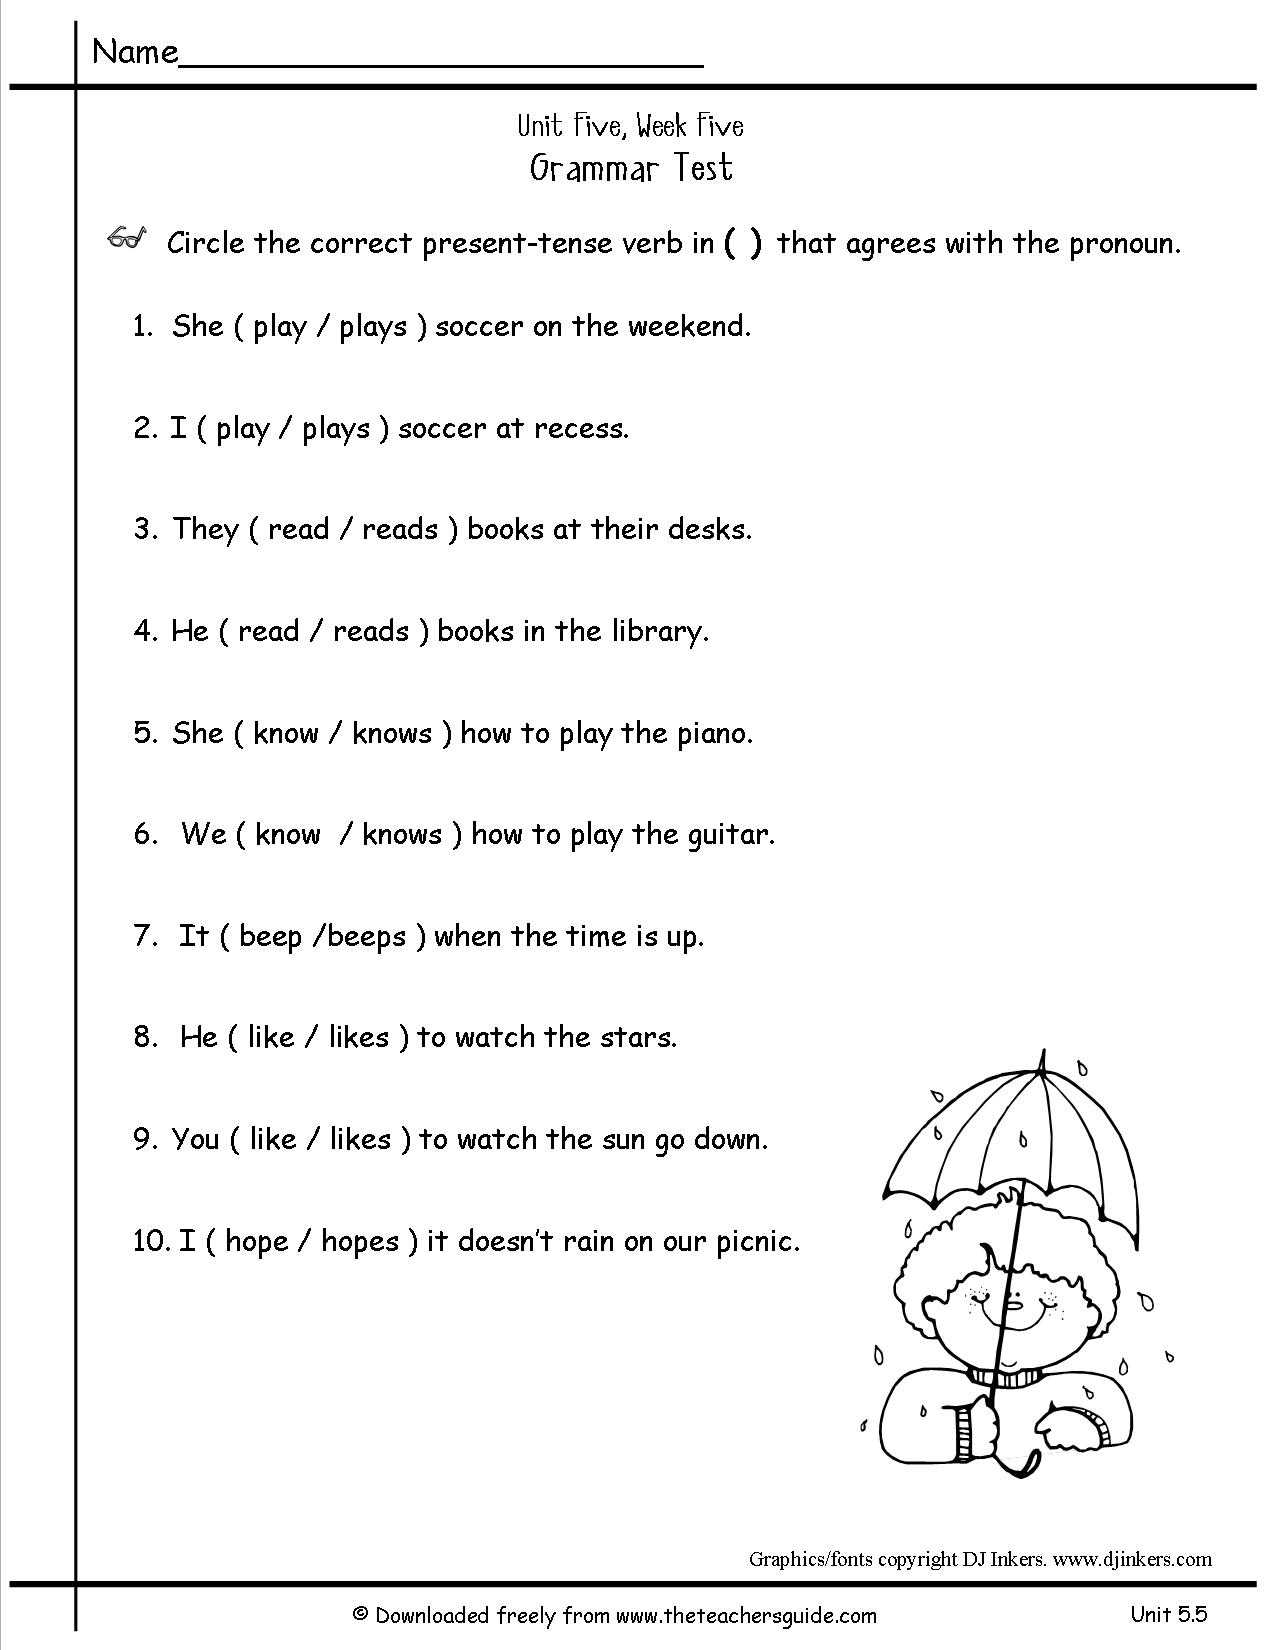 Phonics Worksheets Grade 1 Also Phonics Worksheets for Second Grade the Best Worksheets Image